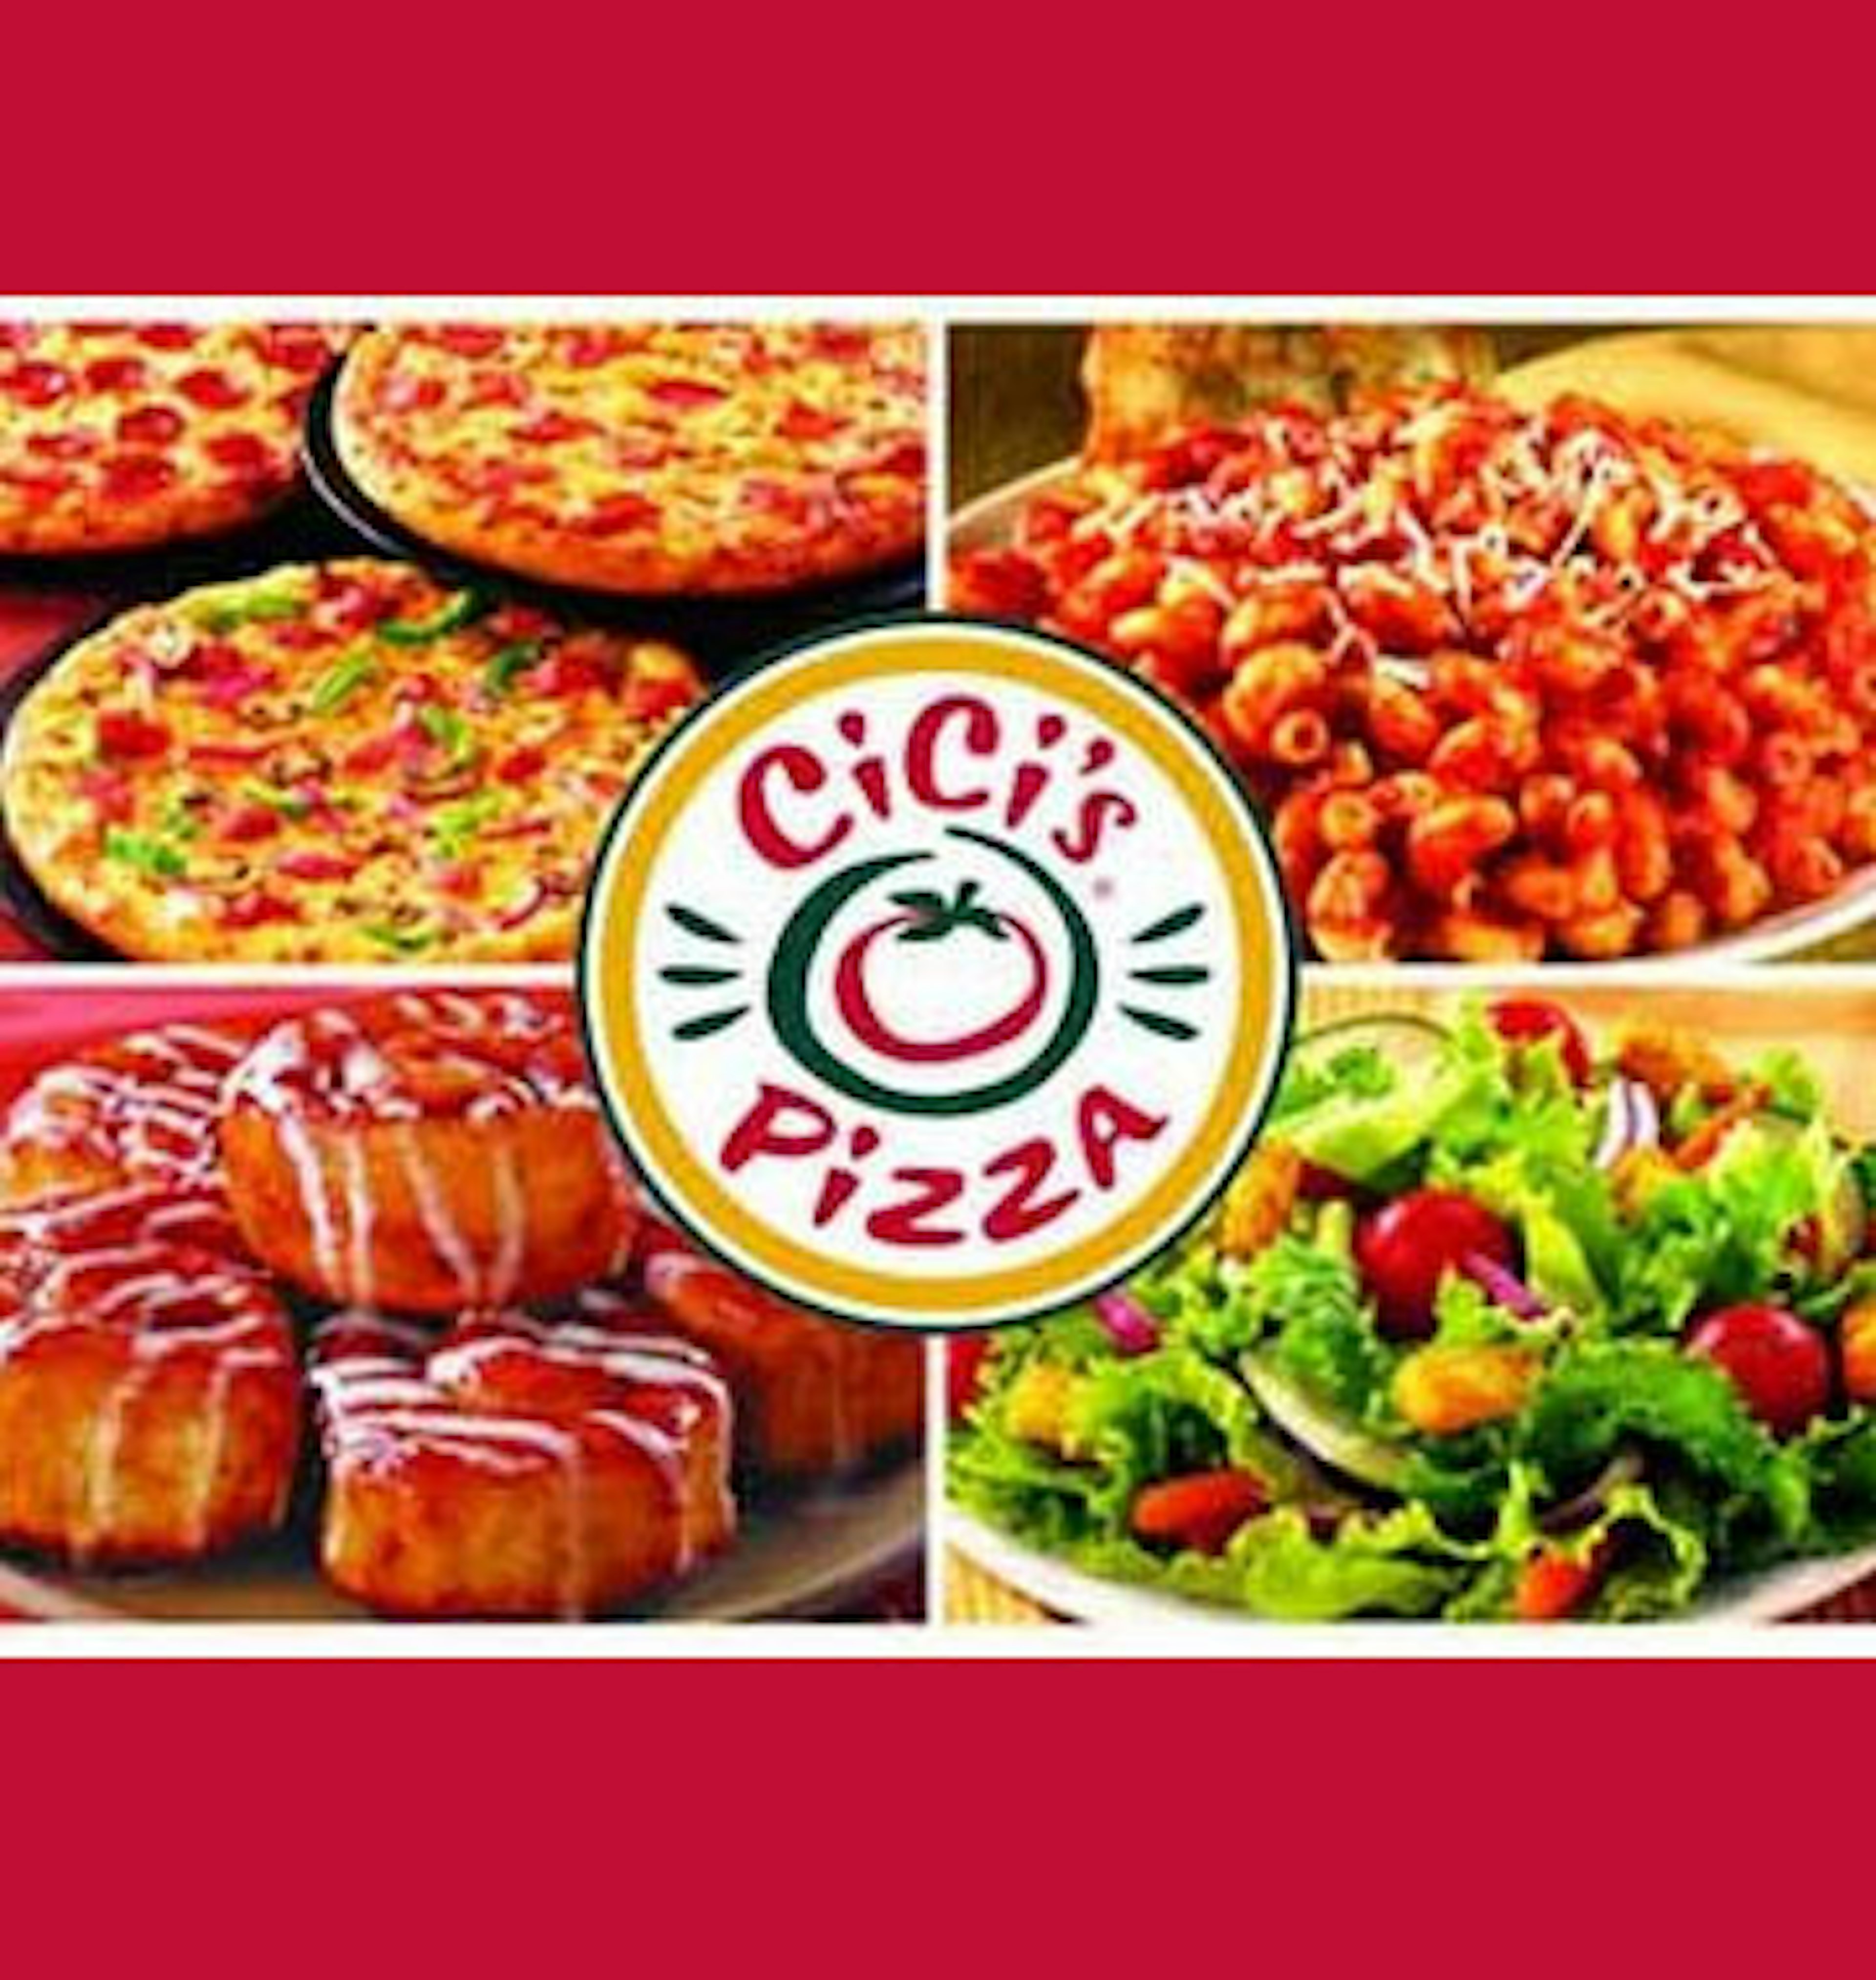 CiCi’s Beyond Pizza